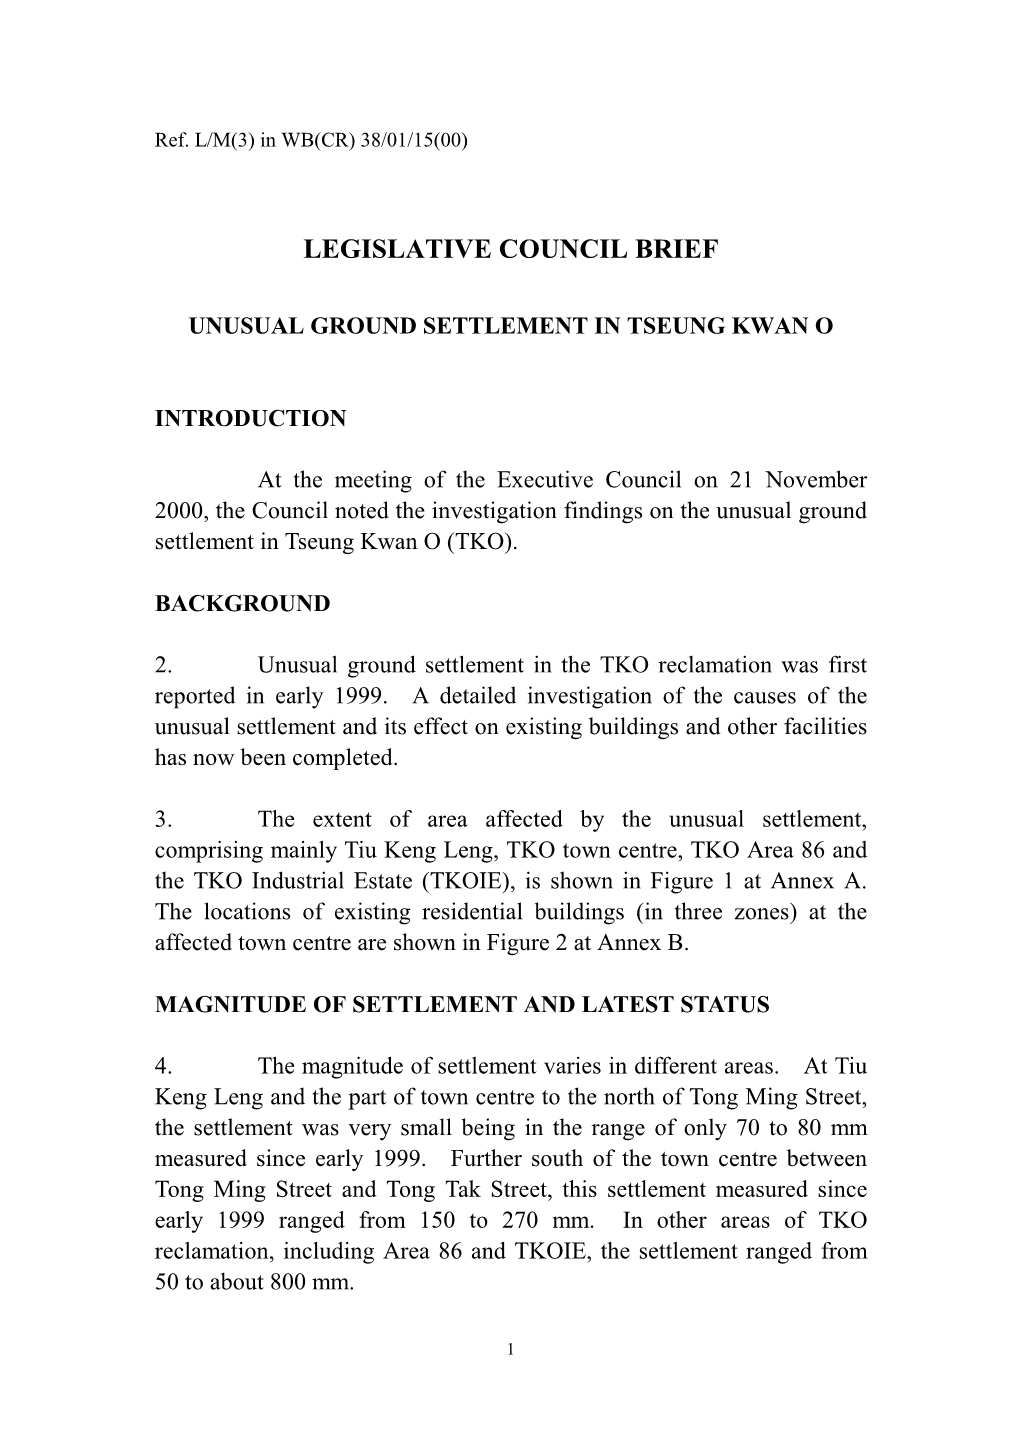 Legislative Council Brief -- Unusual Ground Settlement in Tseung Kwan O